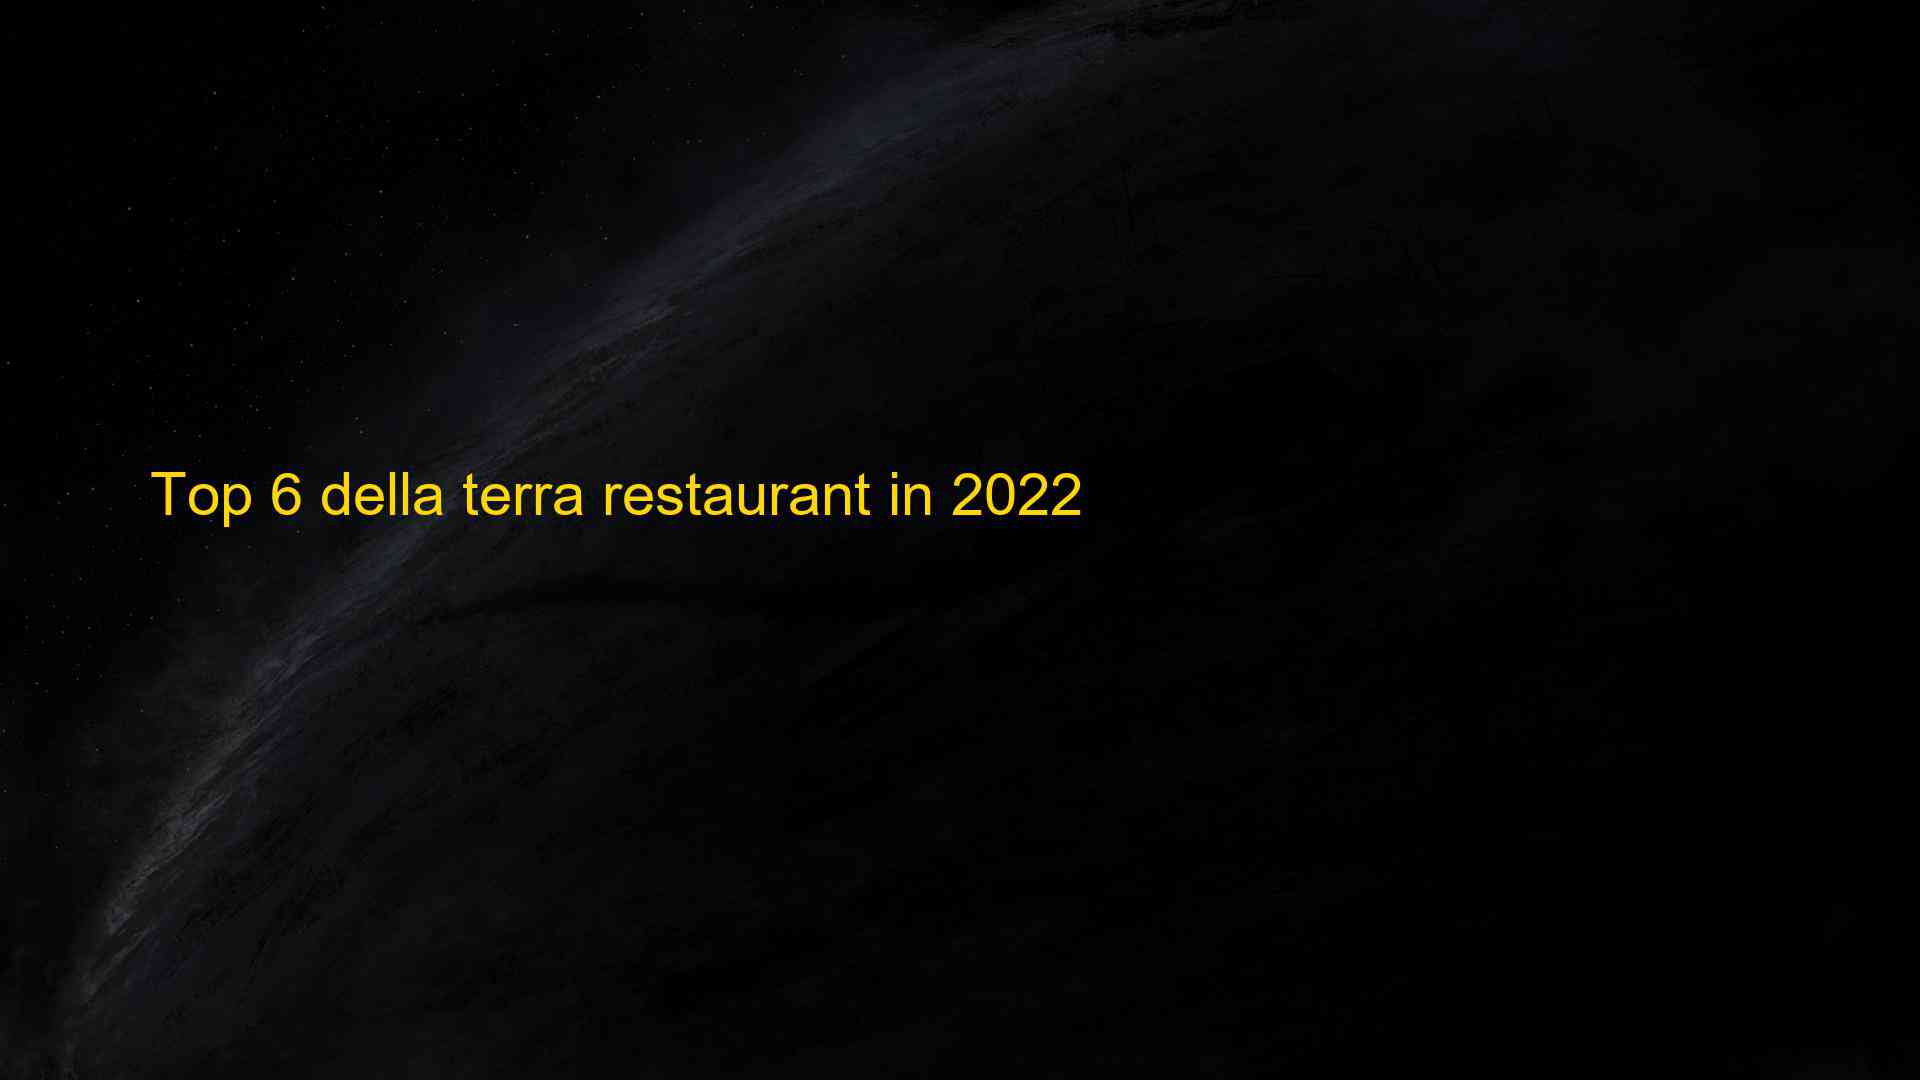 Top 6 della terra restaurant in 2022 1663175387